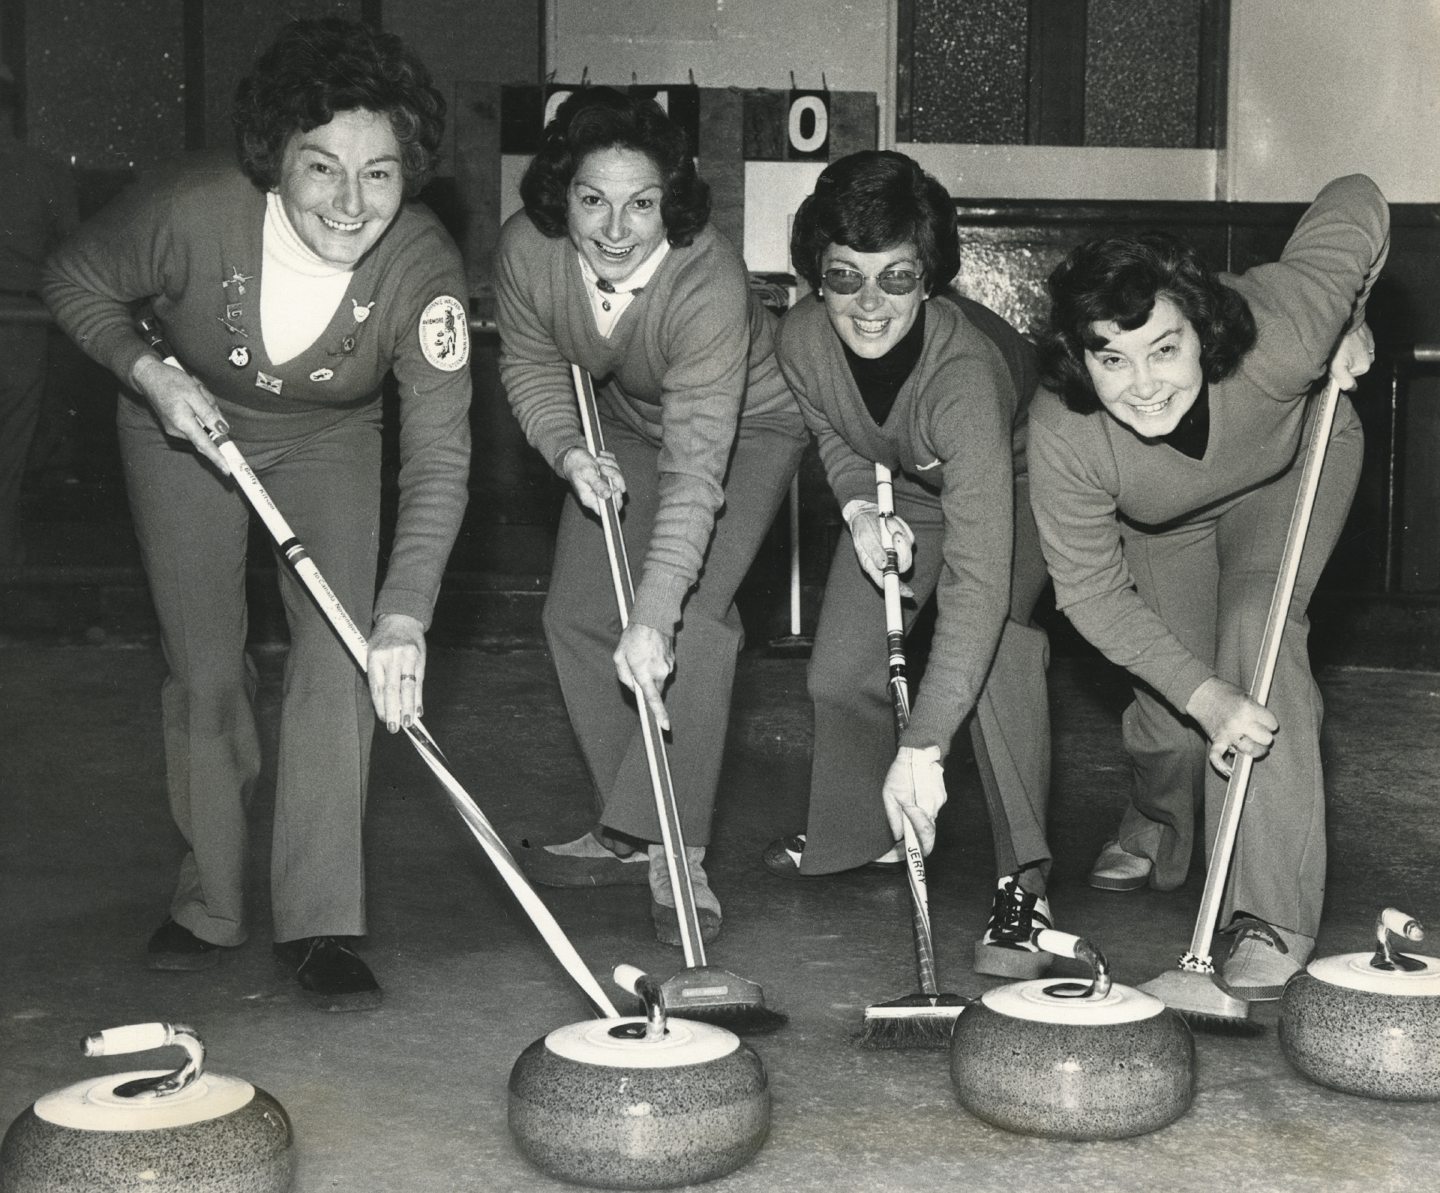 Curling has been a popular sport in Aberdeen through the decades.